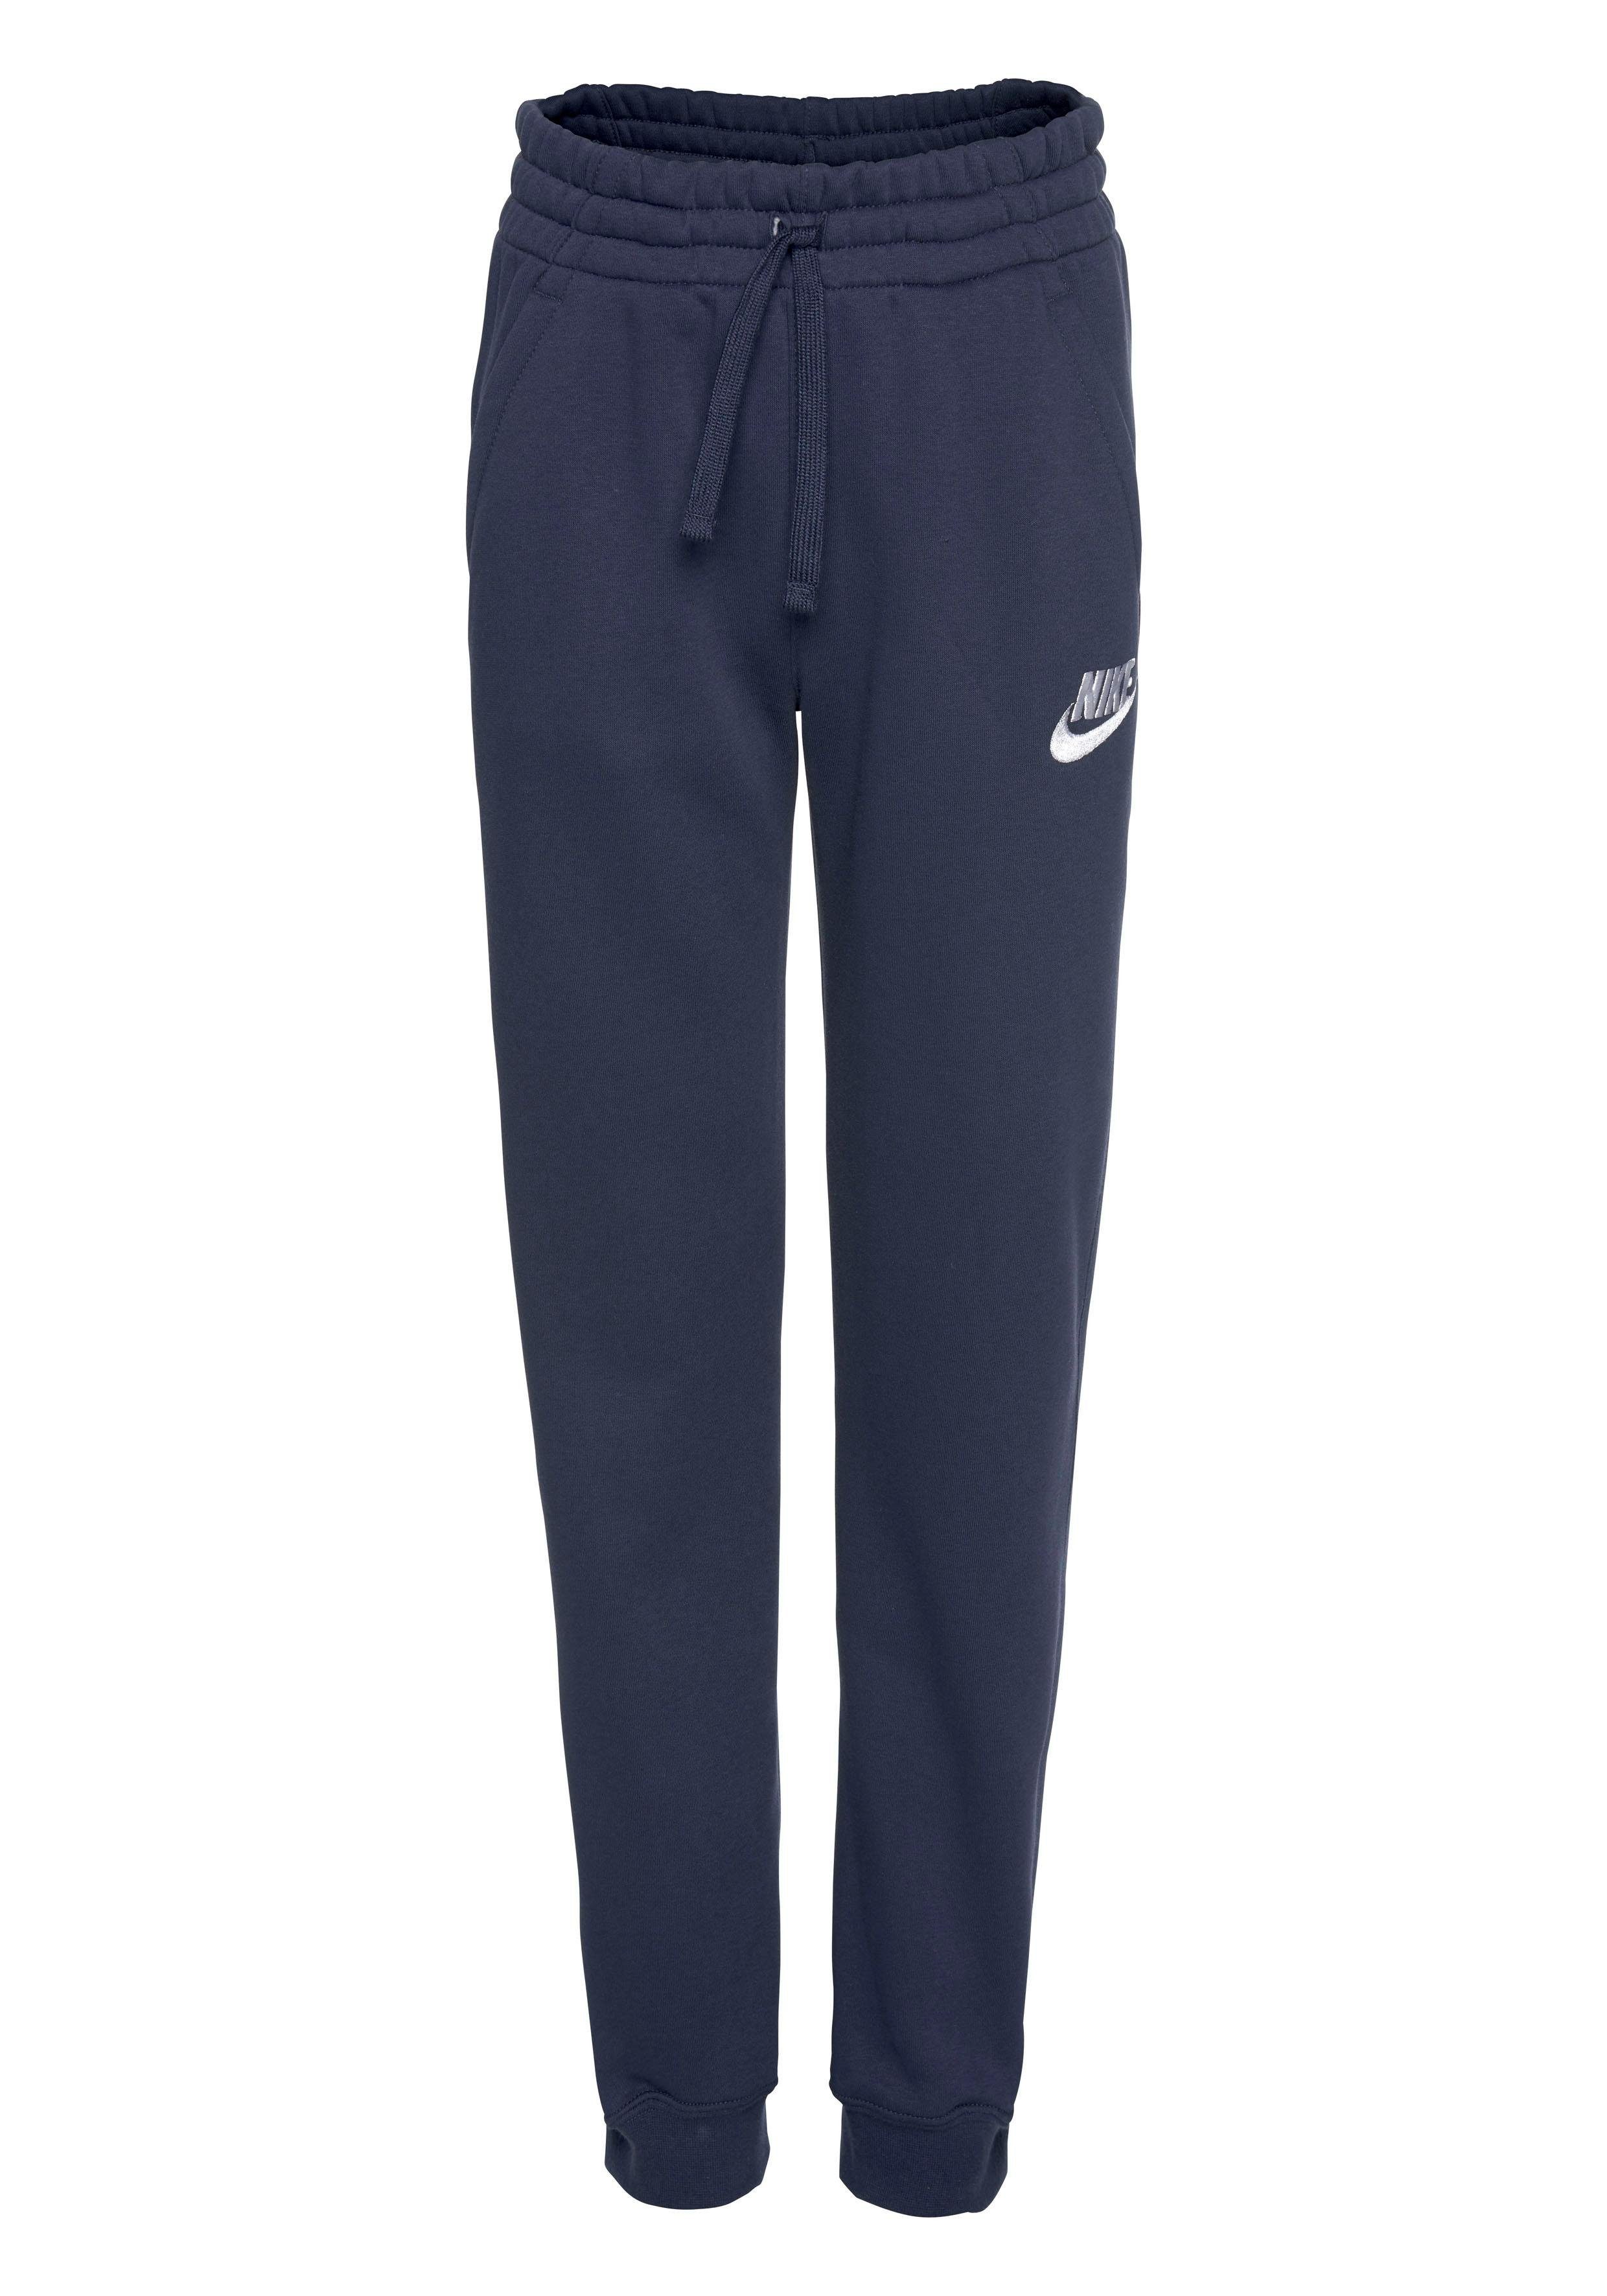 B FLEECE JOGGER Sportswear CLUB PANT dunkelblau Jogginghose Nike NSW